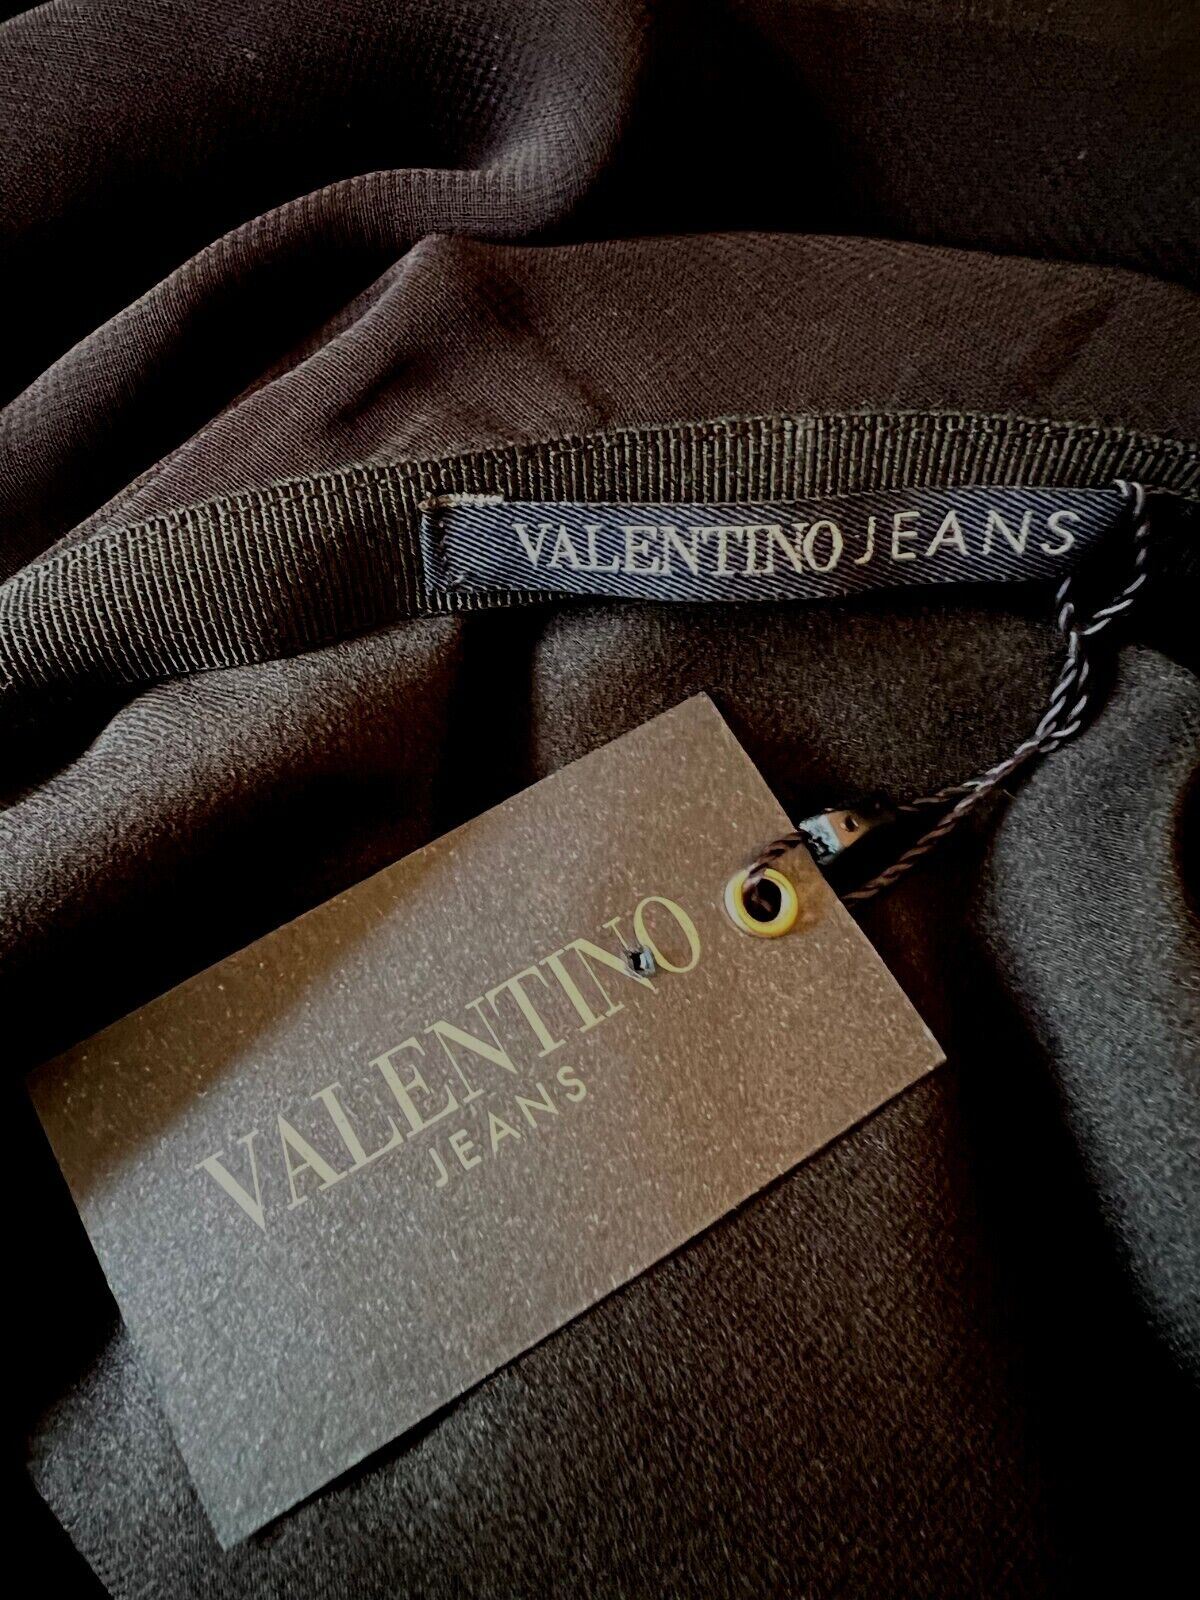 Valentino Jeans Womens Black & White Floral Chiffon Skirt UK 14 EU 40 US 8 IT 46 Timeless Fashions